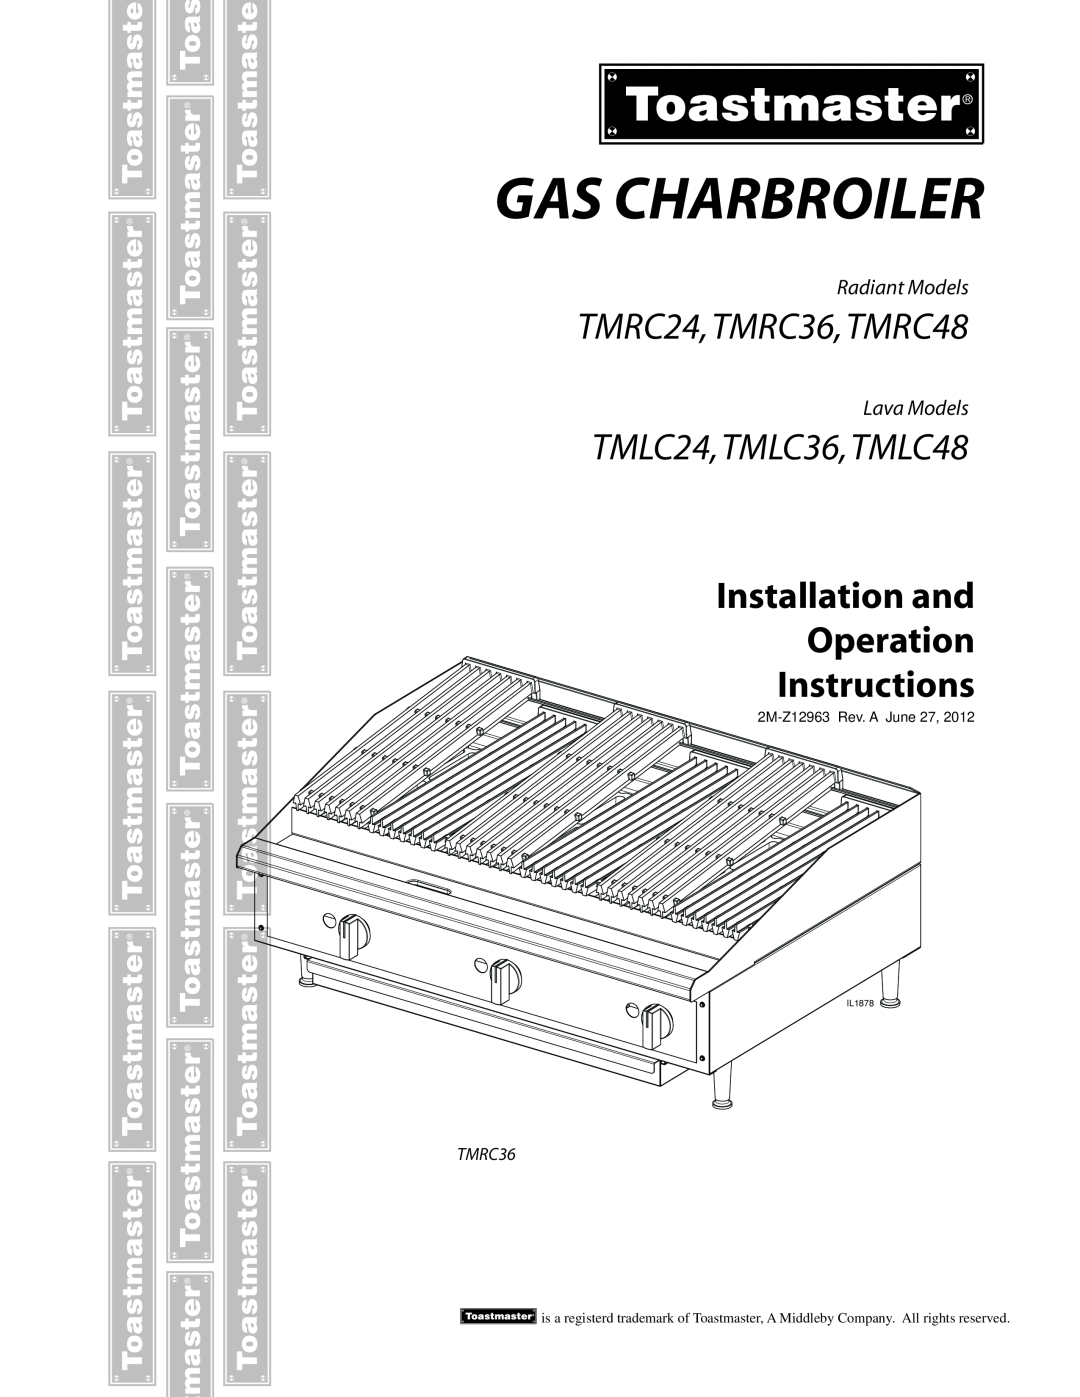 Toastmaster manual Gas Charbroiler, TMRC24, TMRC36, TMRC48, TMLC24, TMLC36, TMLC48, Radiant Models, Lava Models, IL1878 